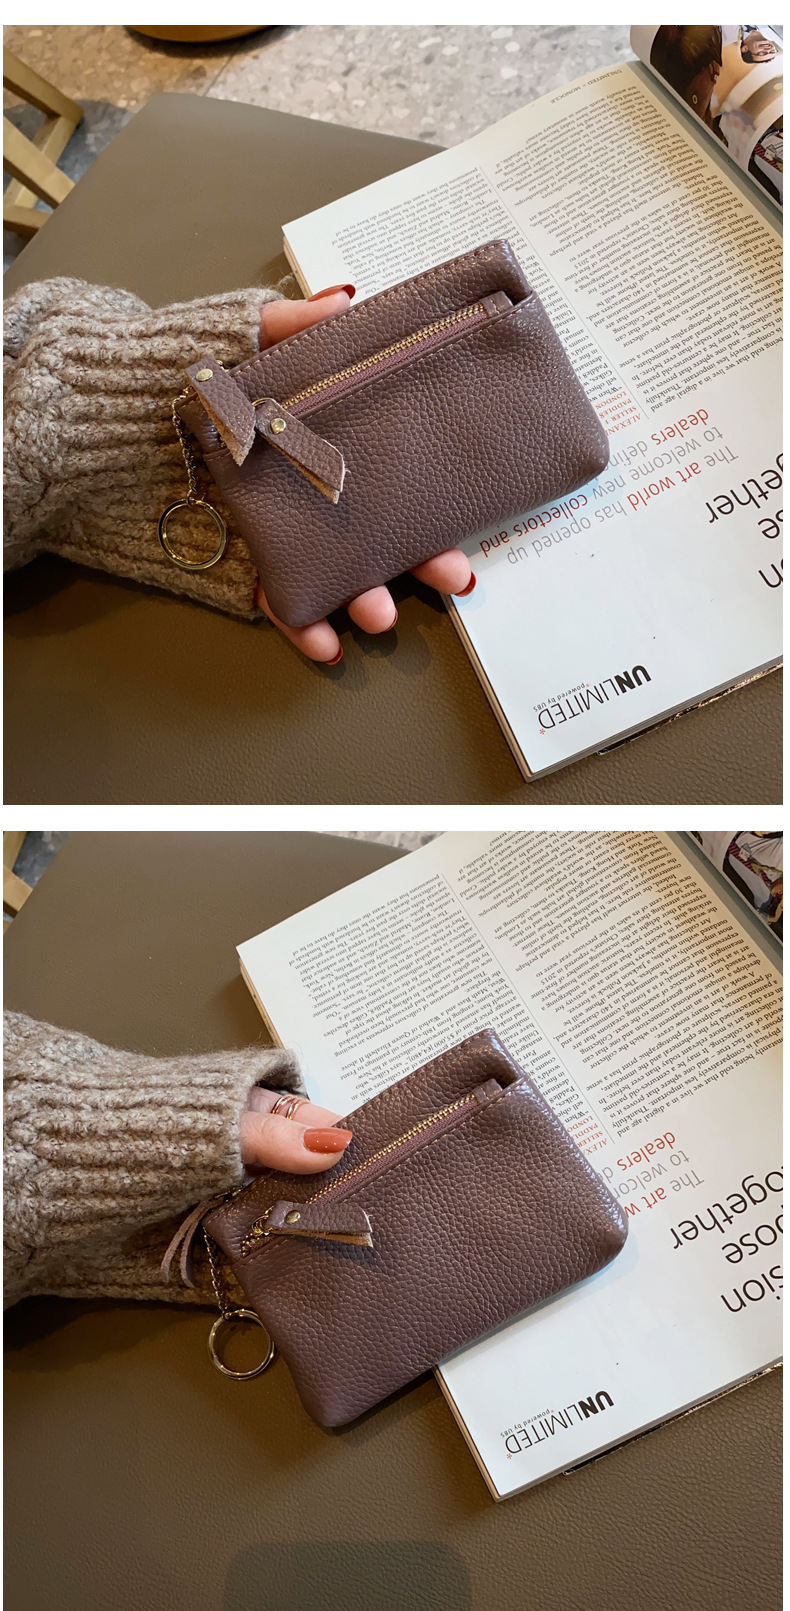 ESPE Gemma Vegan Leather Small Wallet with Cherry Blossom Appliqué Grey